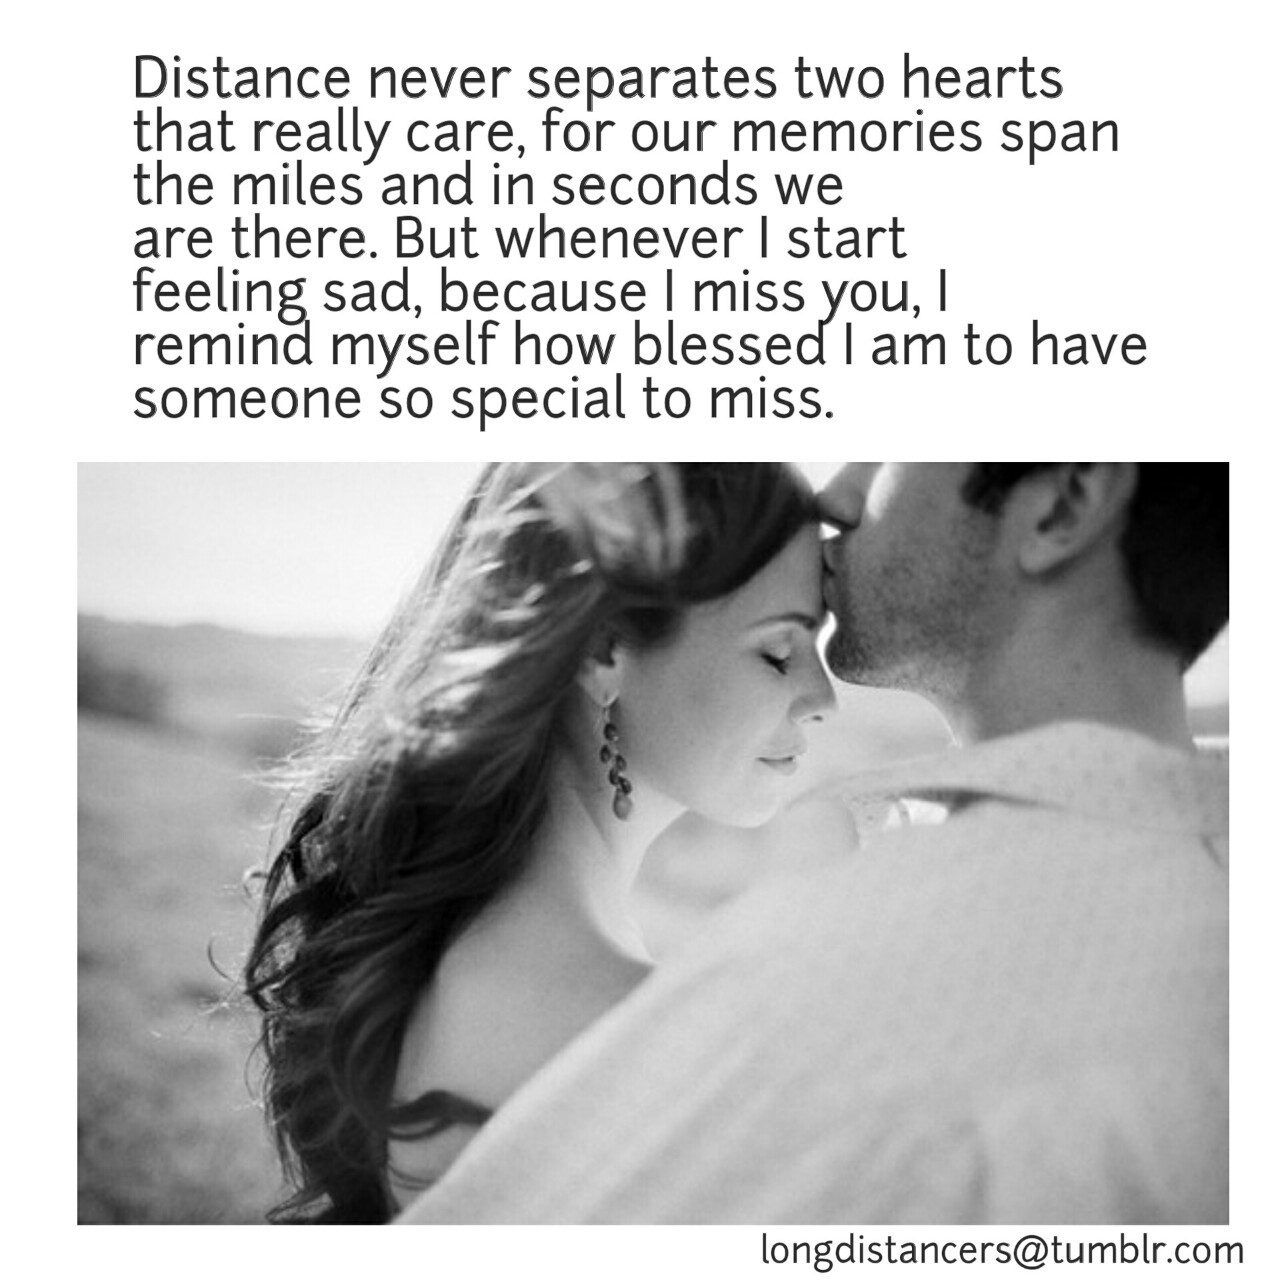 long distance relationship ldr i miss you love quotes relationship longdistancers tumblr